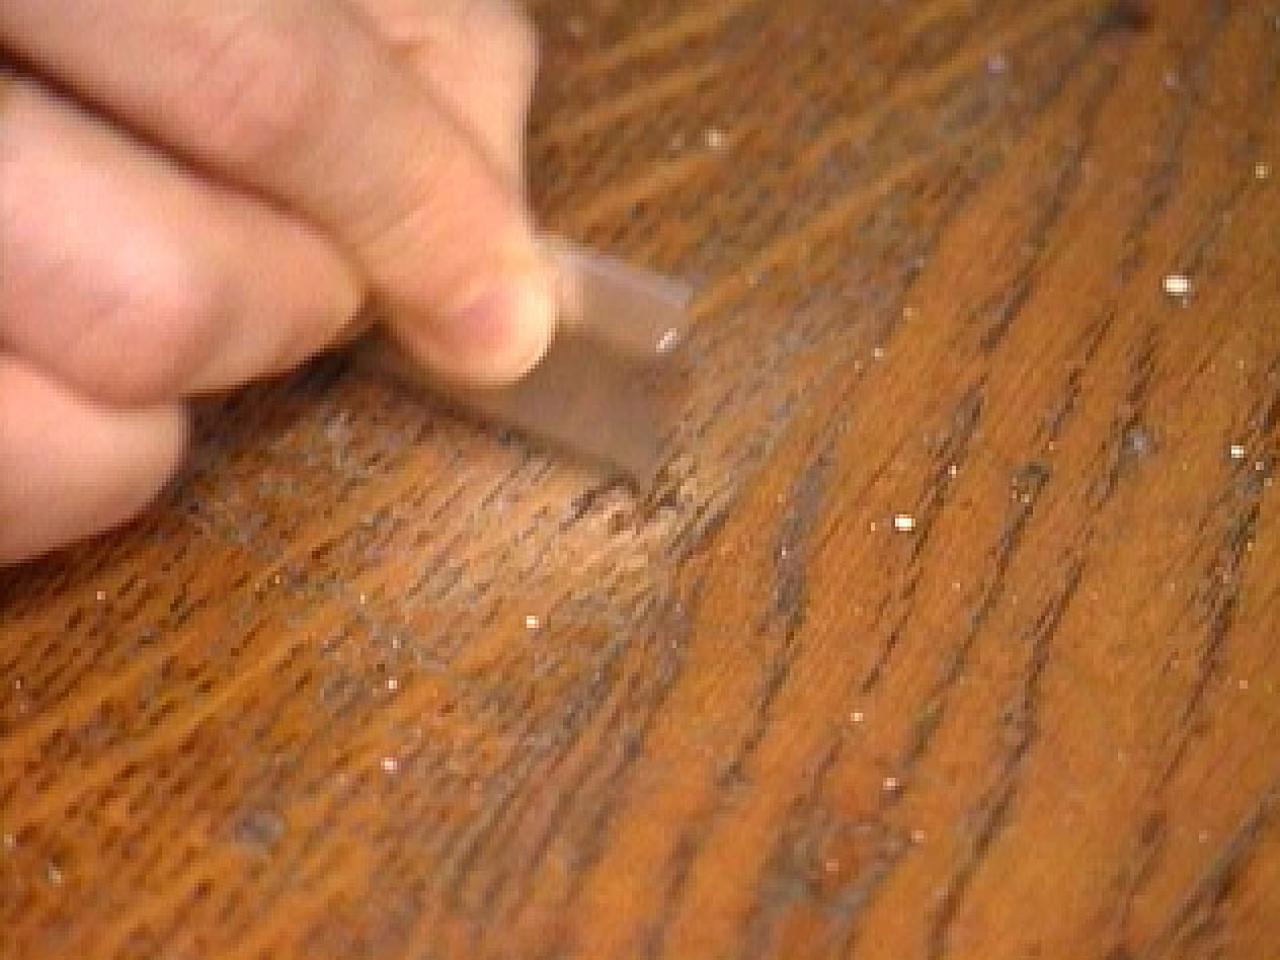 Remove Burn Marks On A Hardwood Floor, How To Clean Up Hardwood Floors